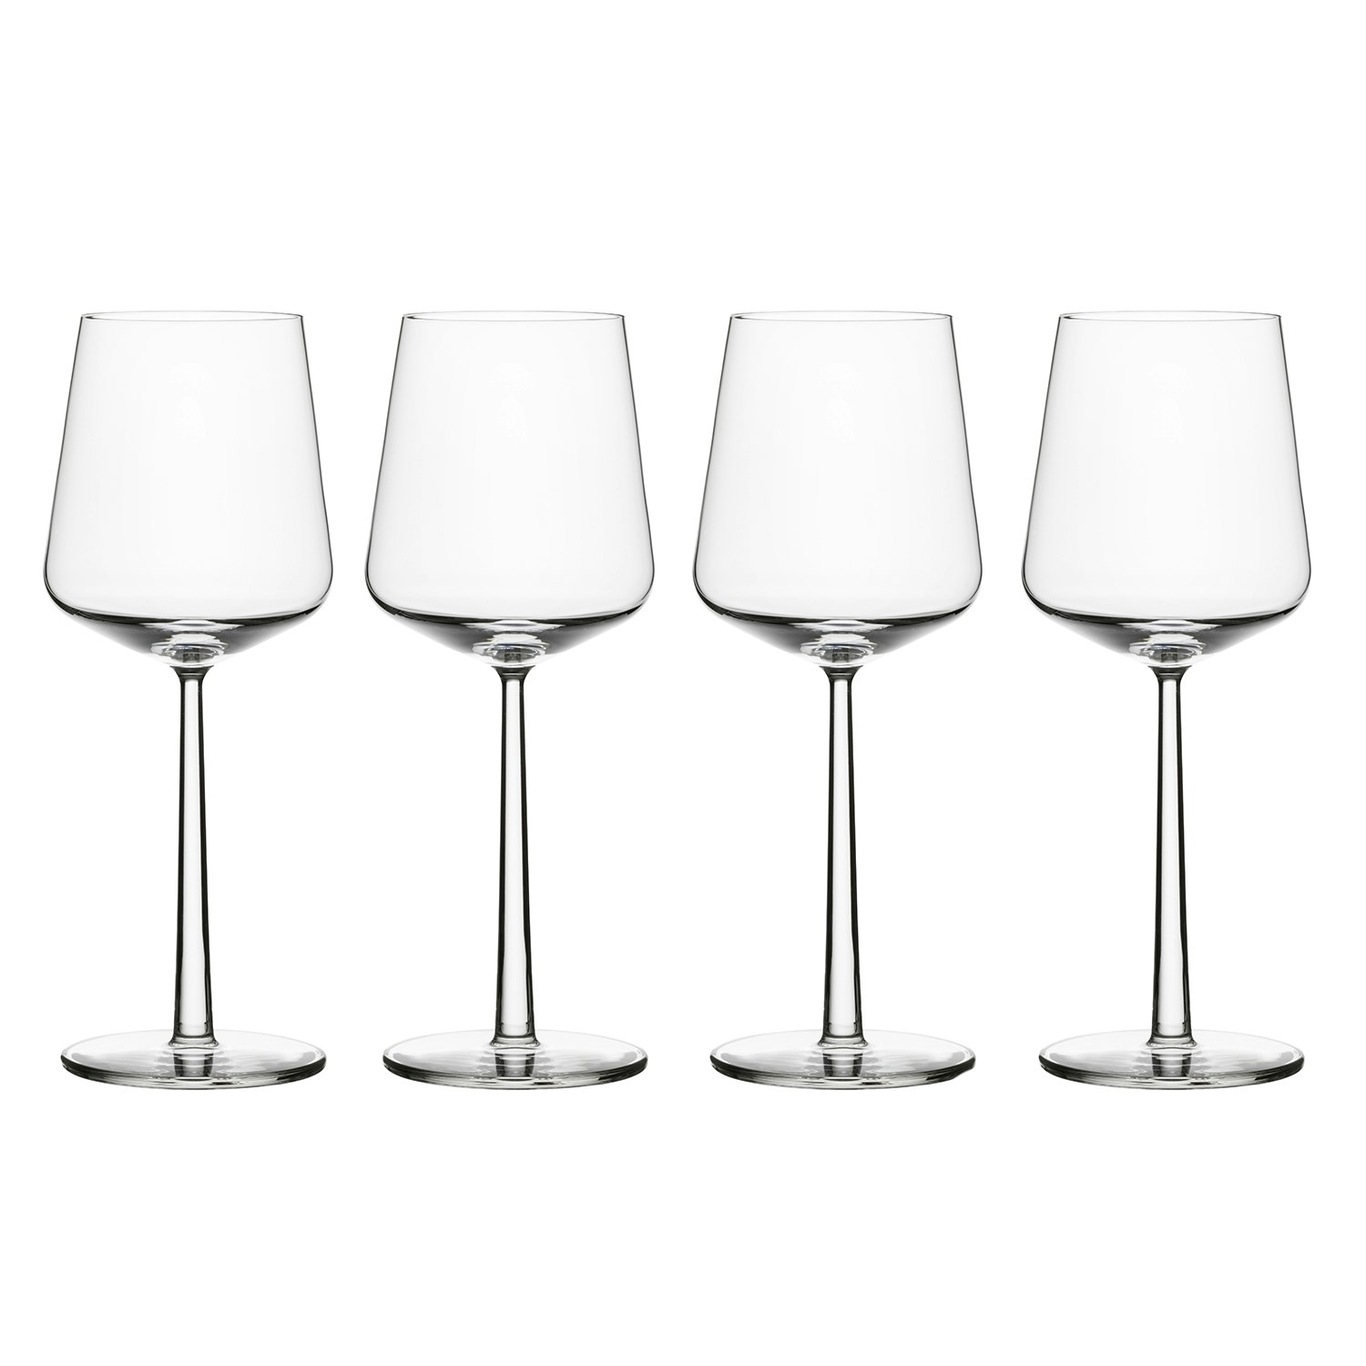 https://royaldesign.com/image/2/iittala-essence-red-wine-glass-45-cl-4-pcs-0?w=800&quality=80